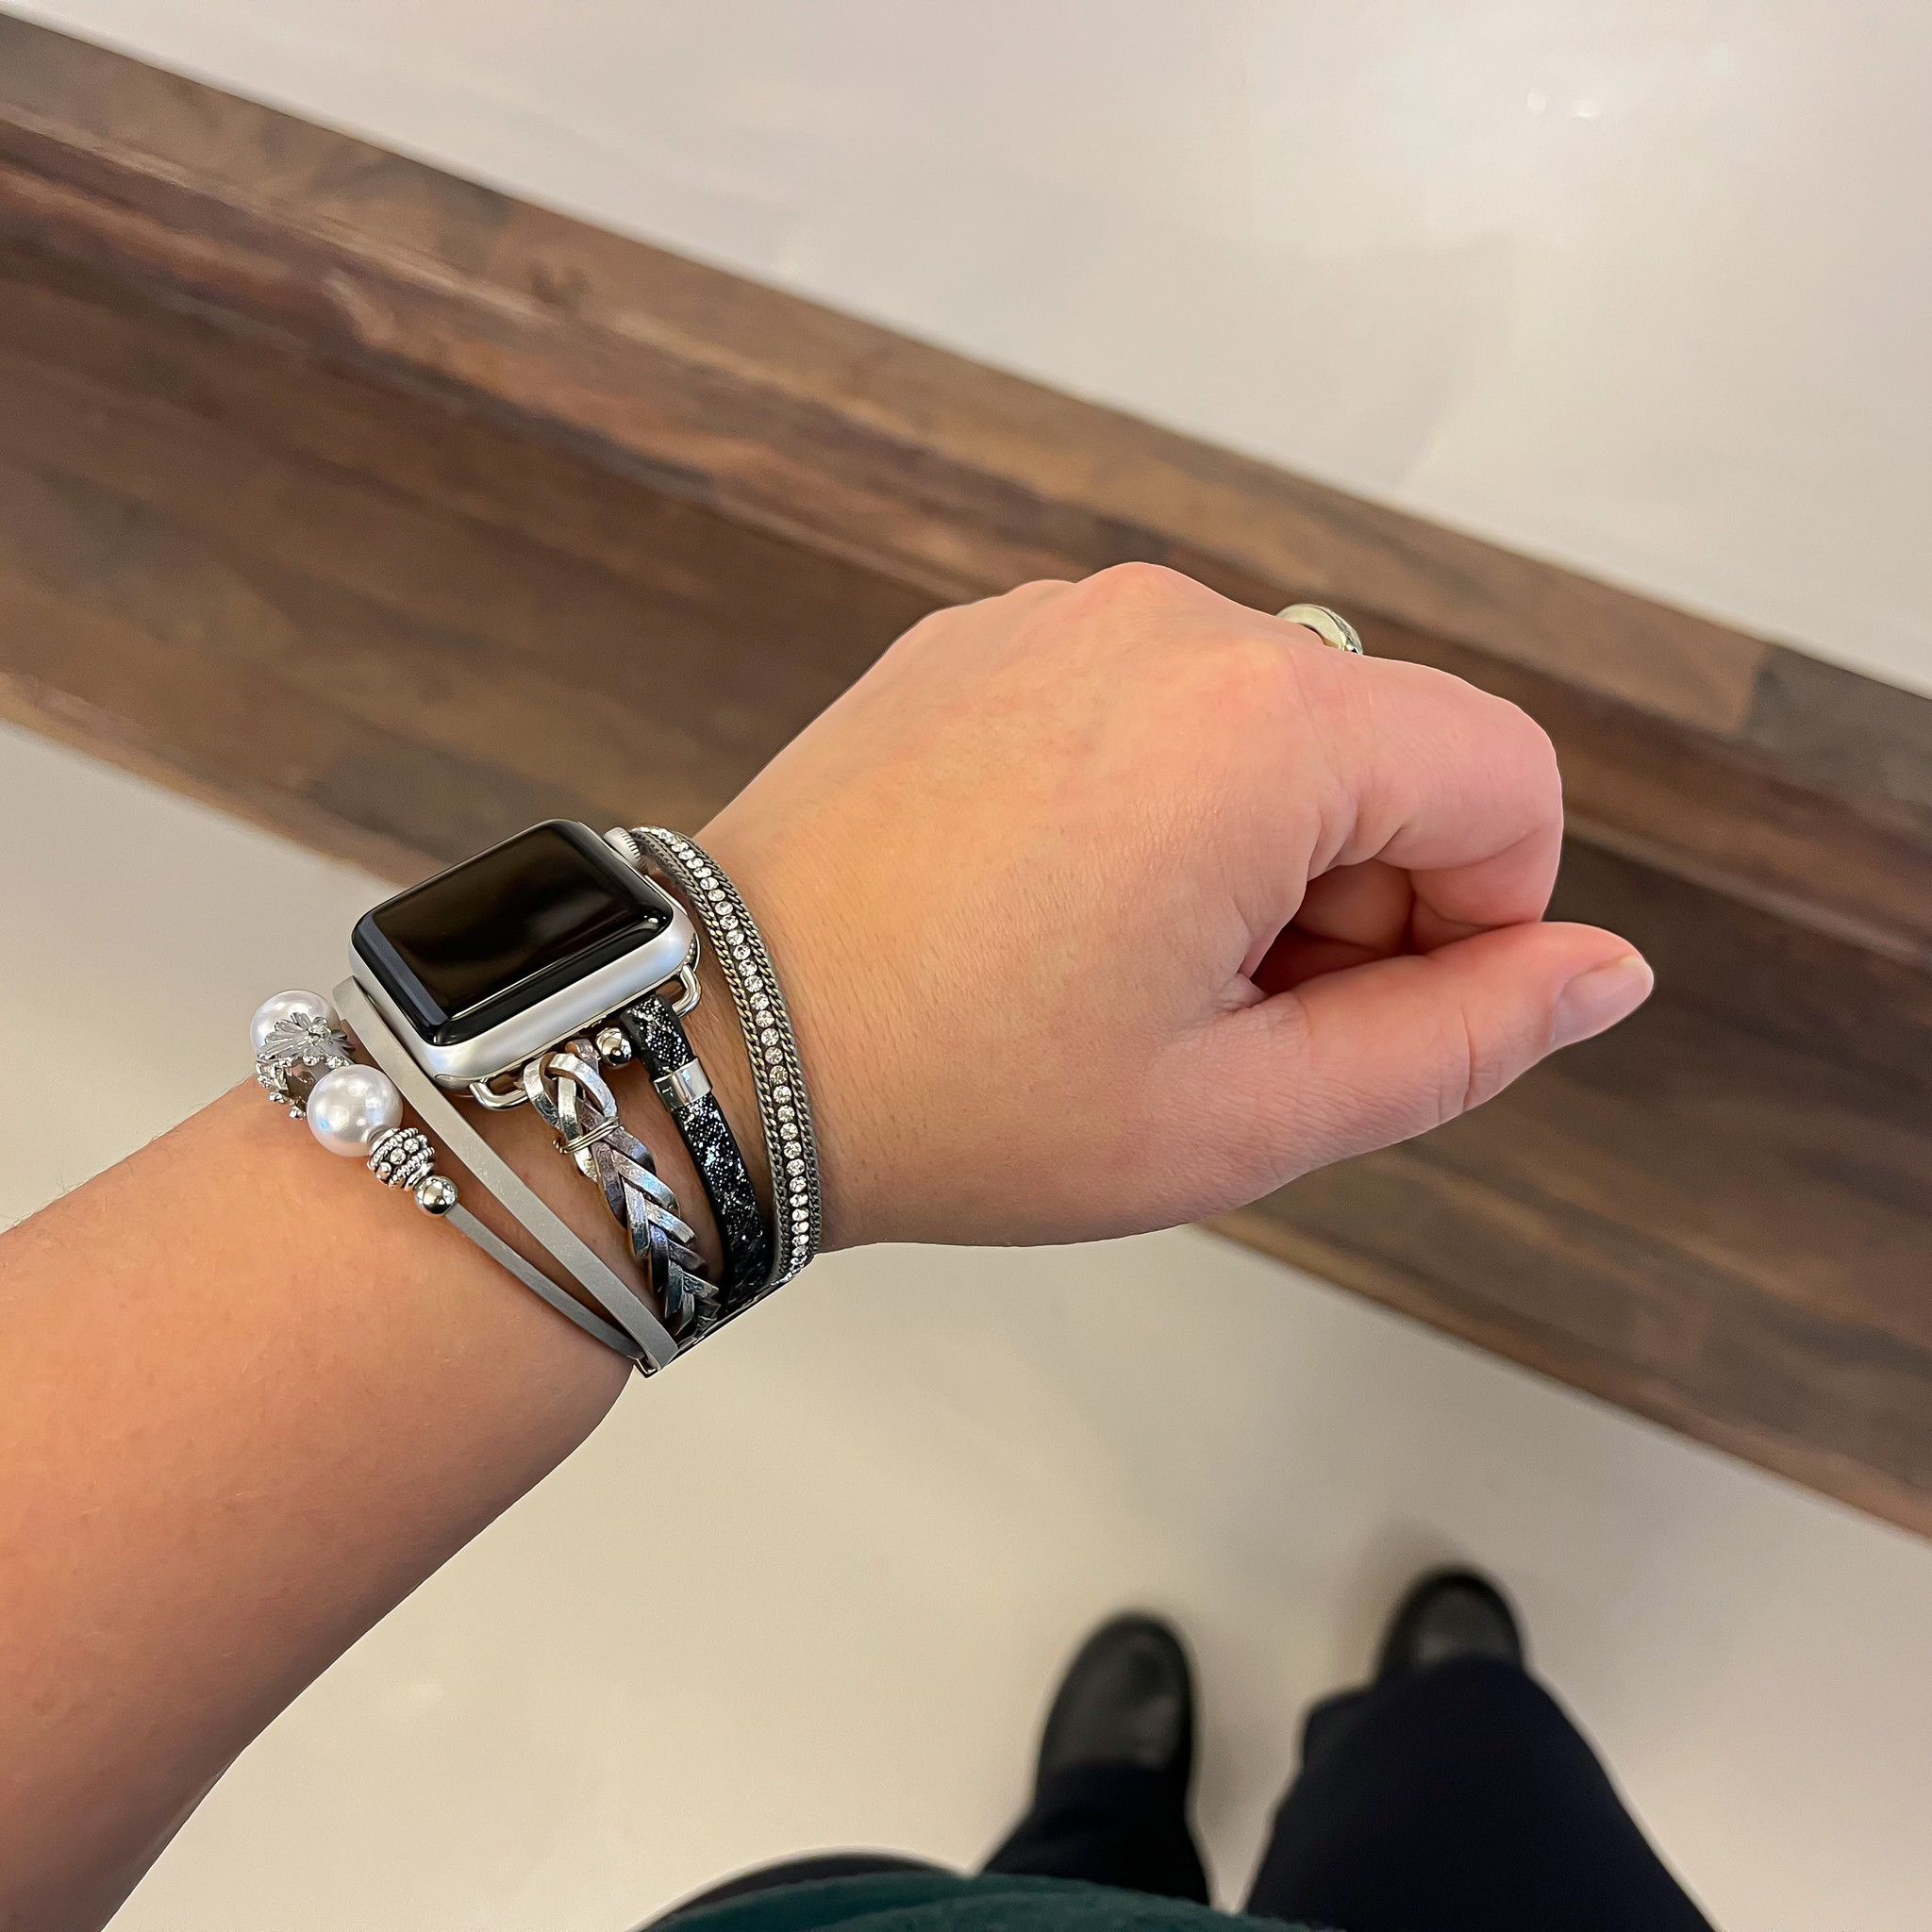 Apple Watch sieraden band - Liz zilver